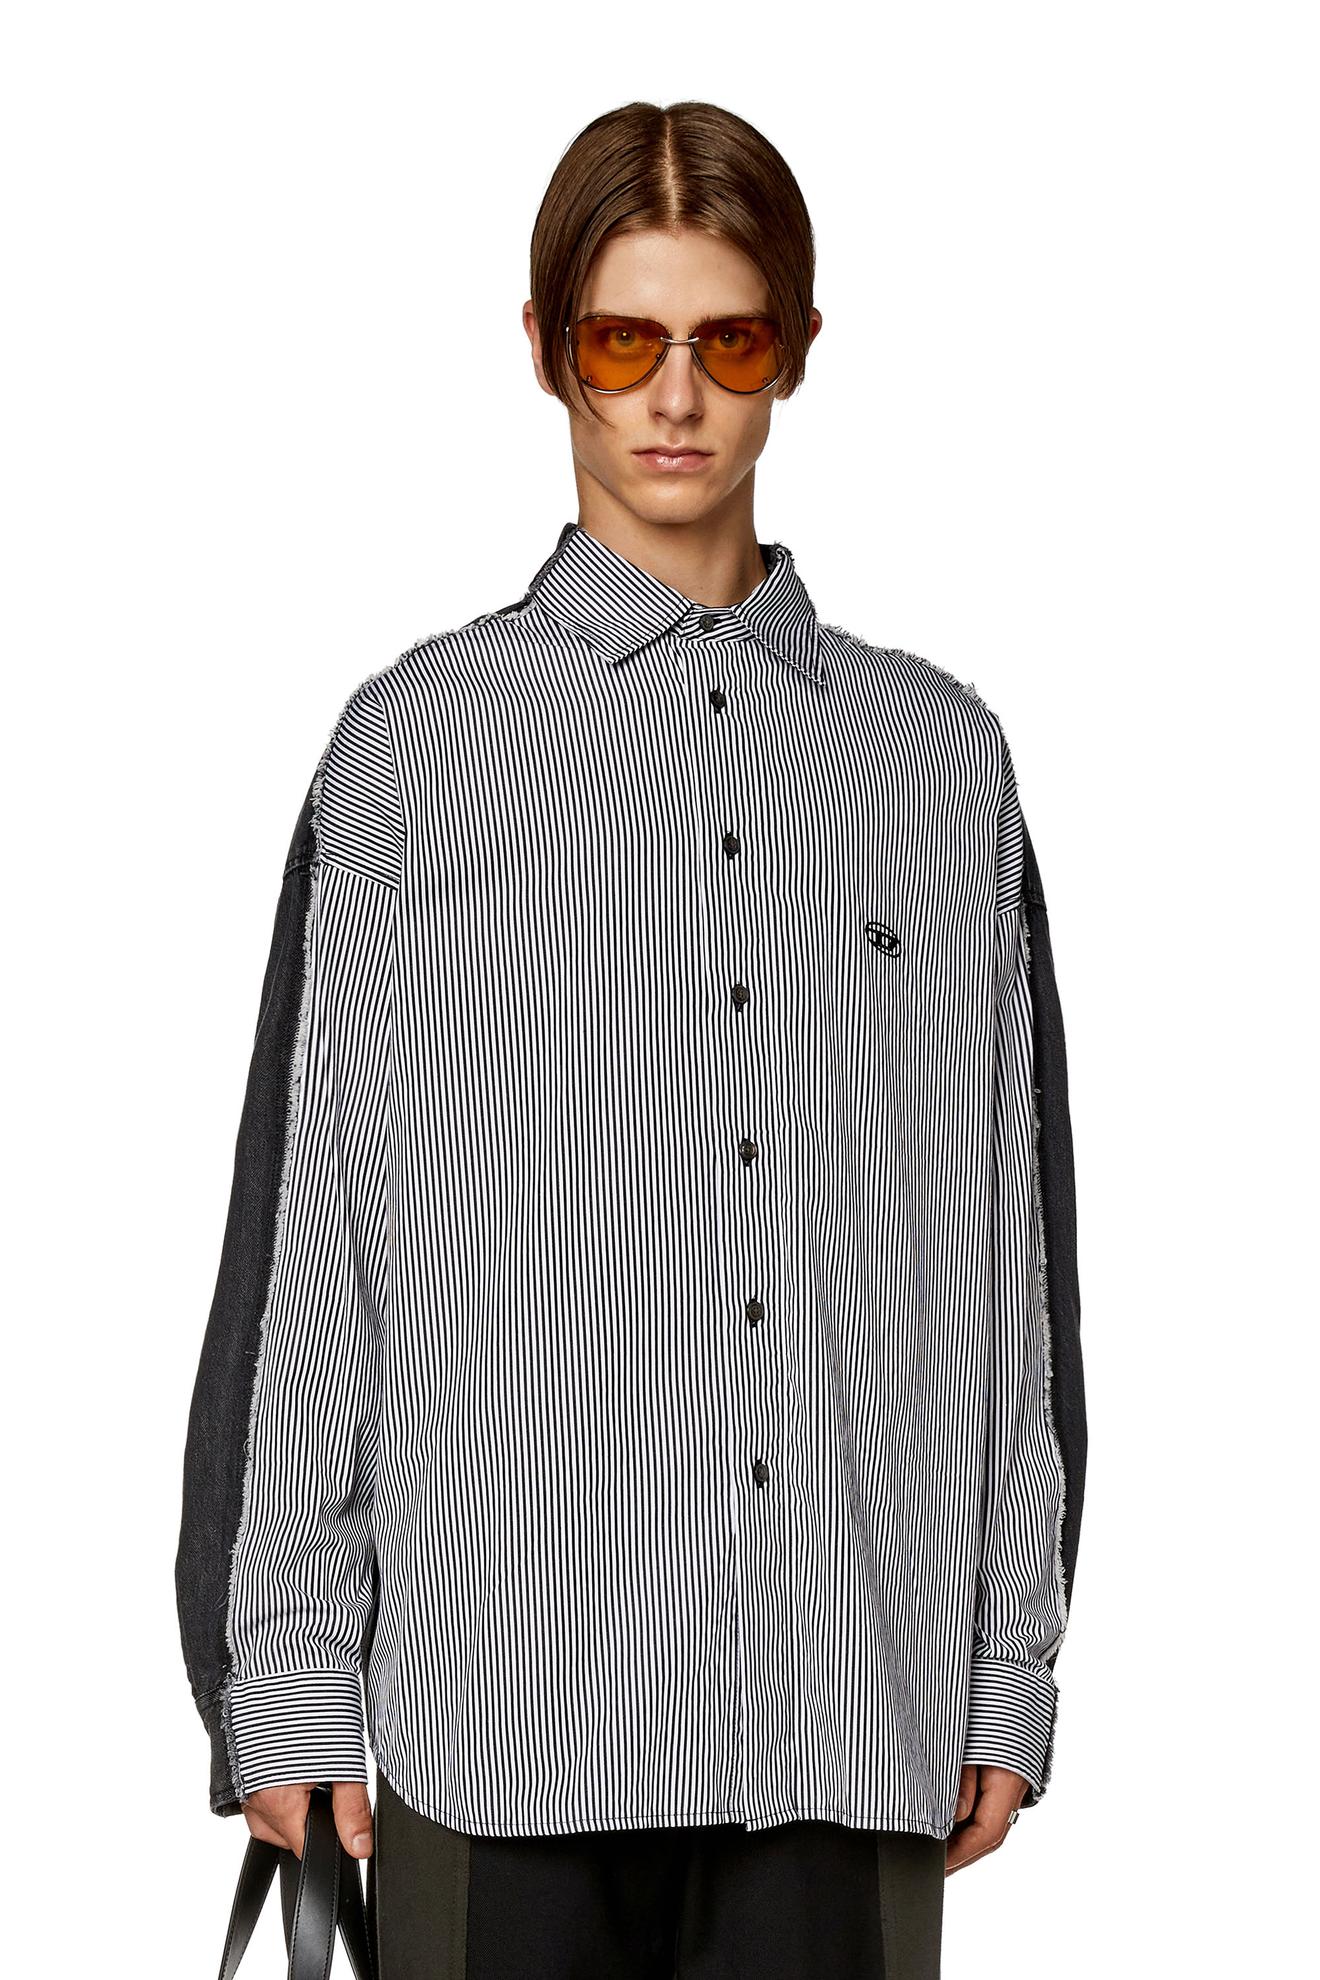 Striped shirt with denim back för 1300 kr på Diesel